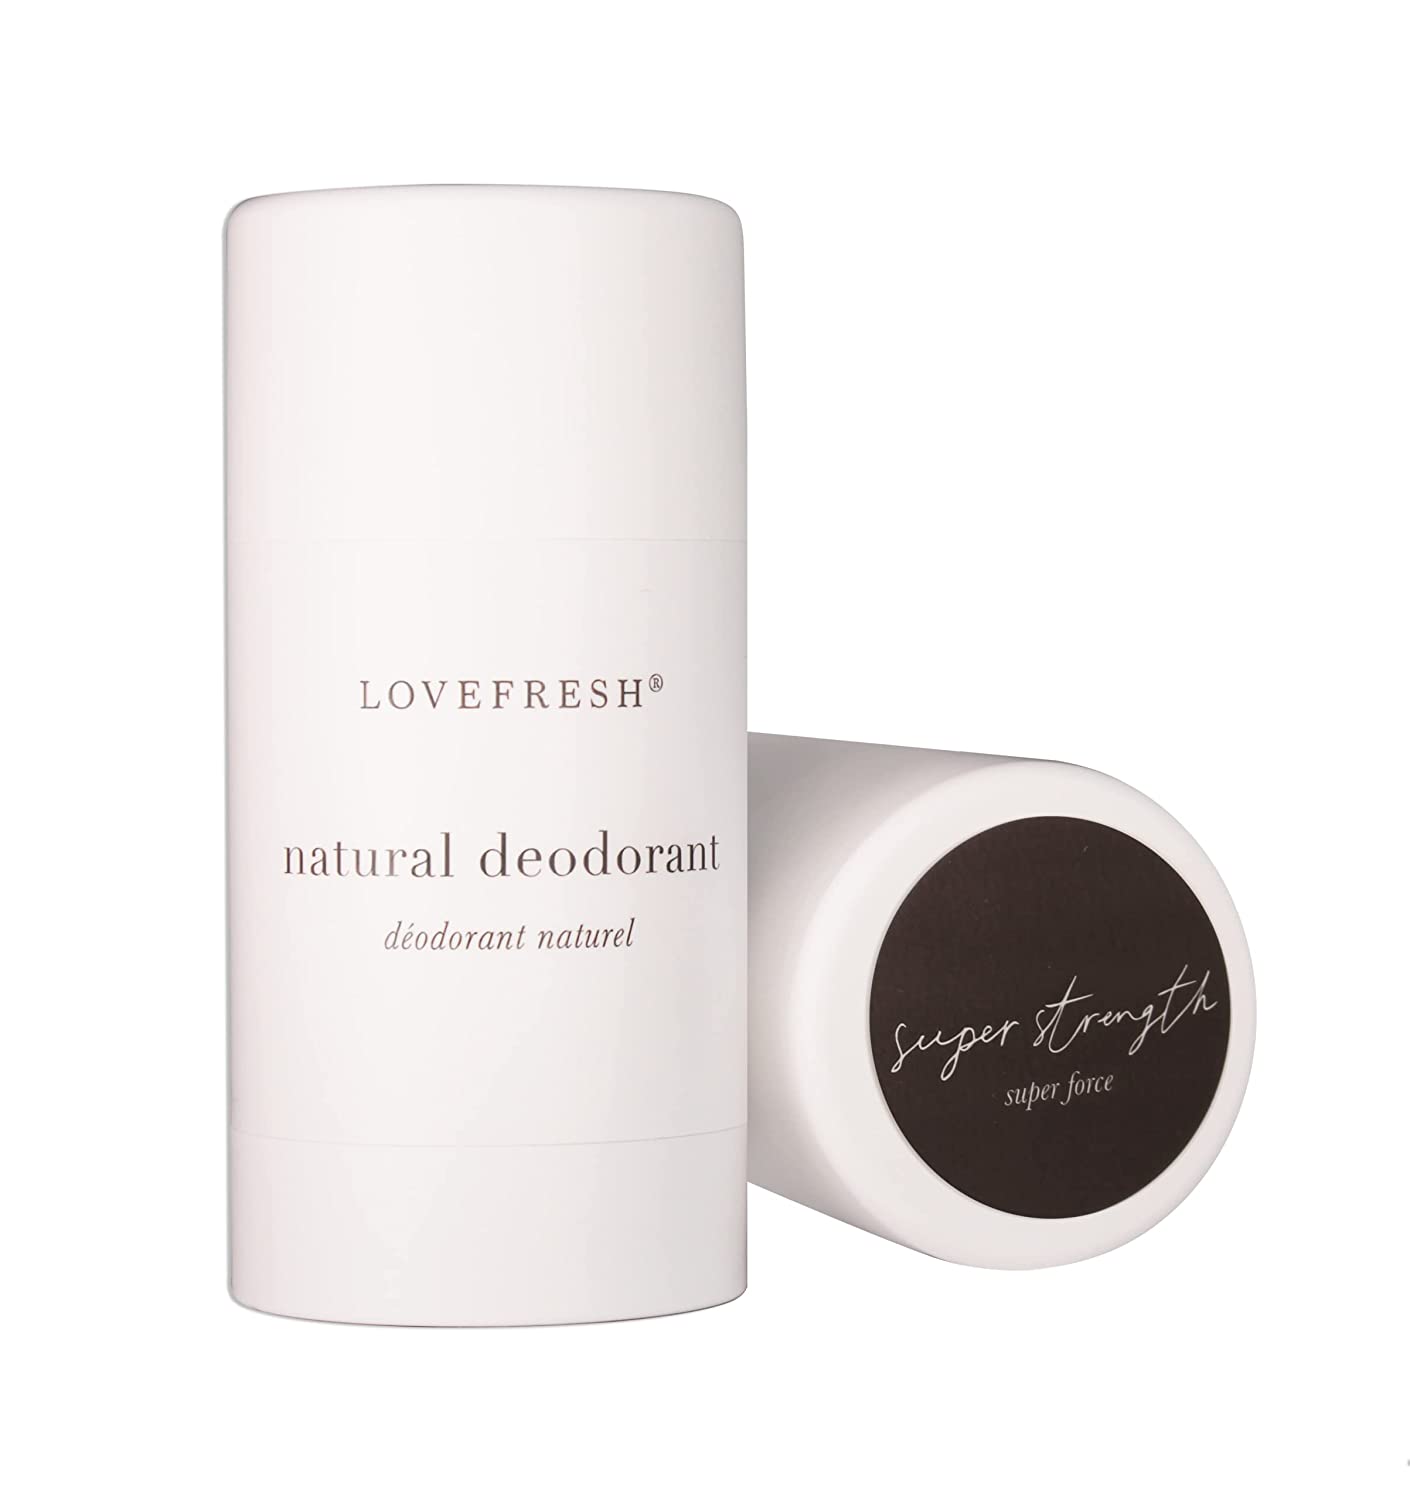  Lovefresh - Natural Deodorant